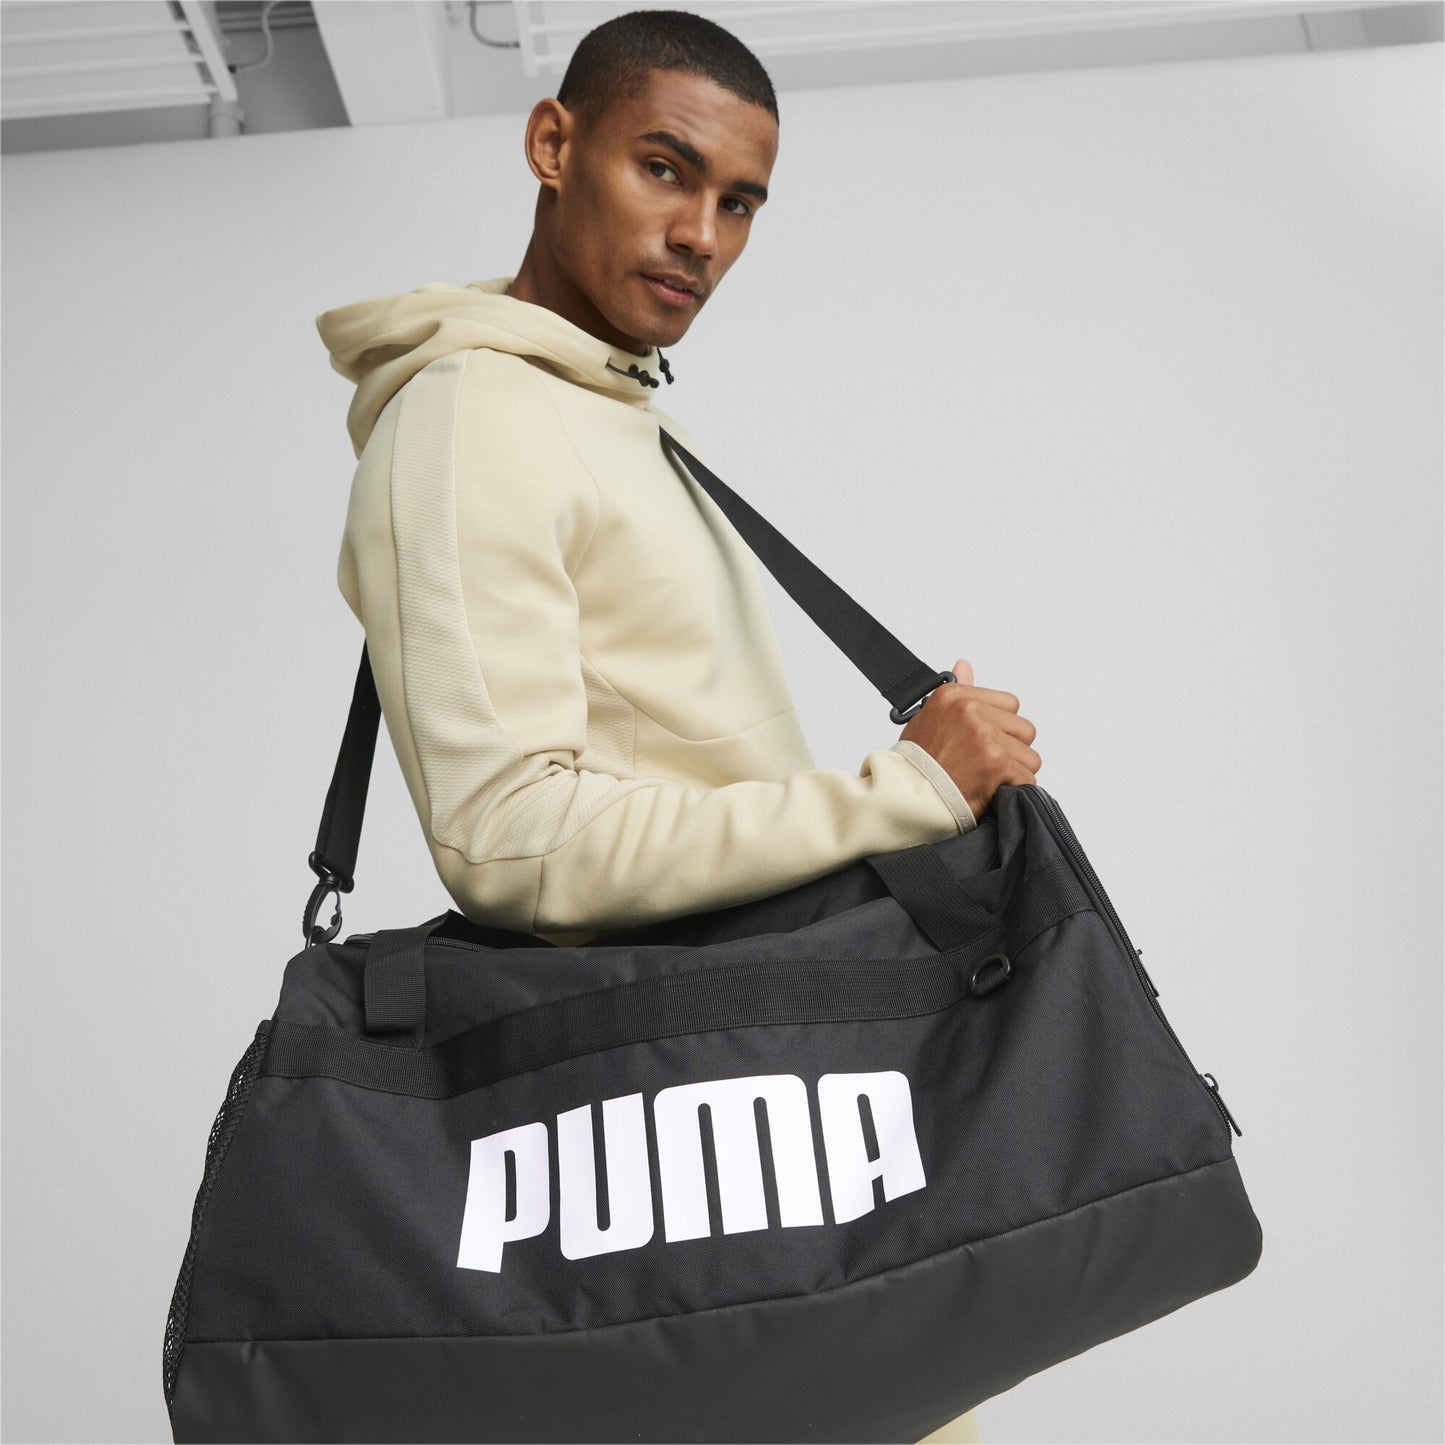 Borsone Challenger Duffel Bag M Puma